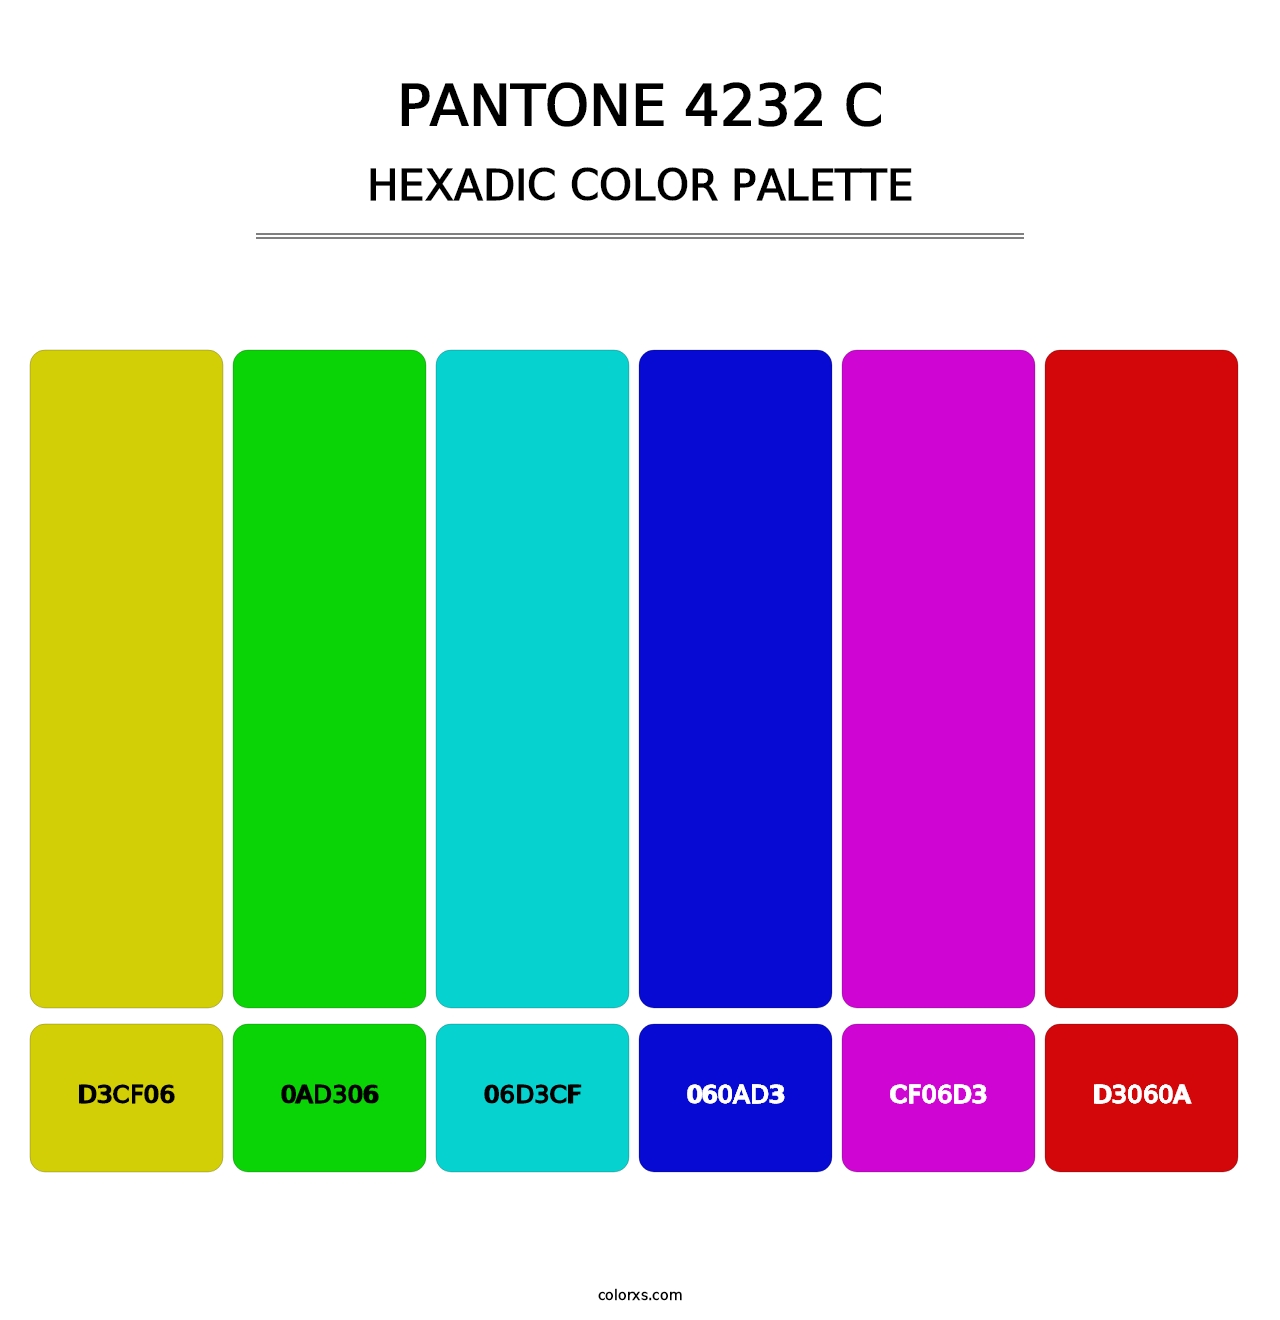 PANTONE 4232 C - Hexadic Color Palette